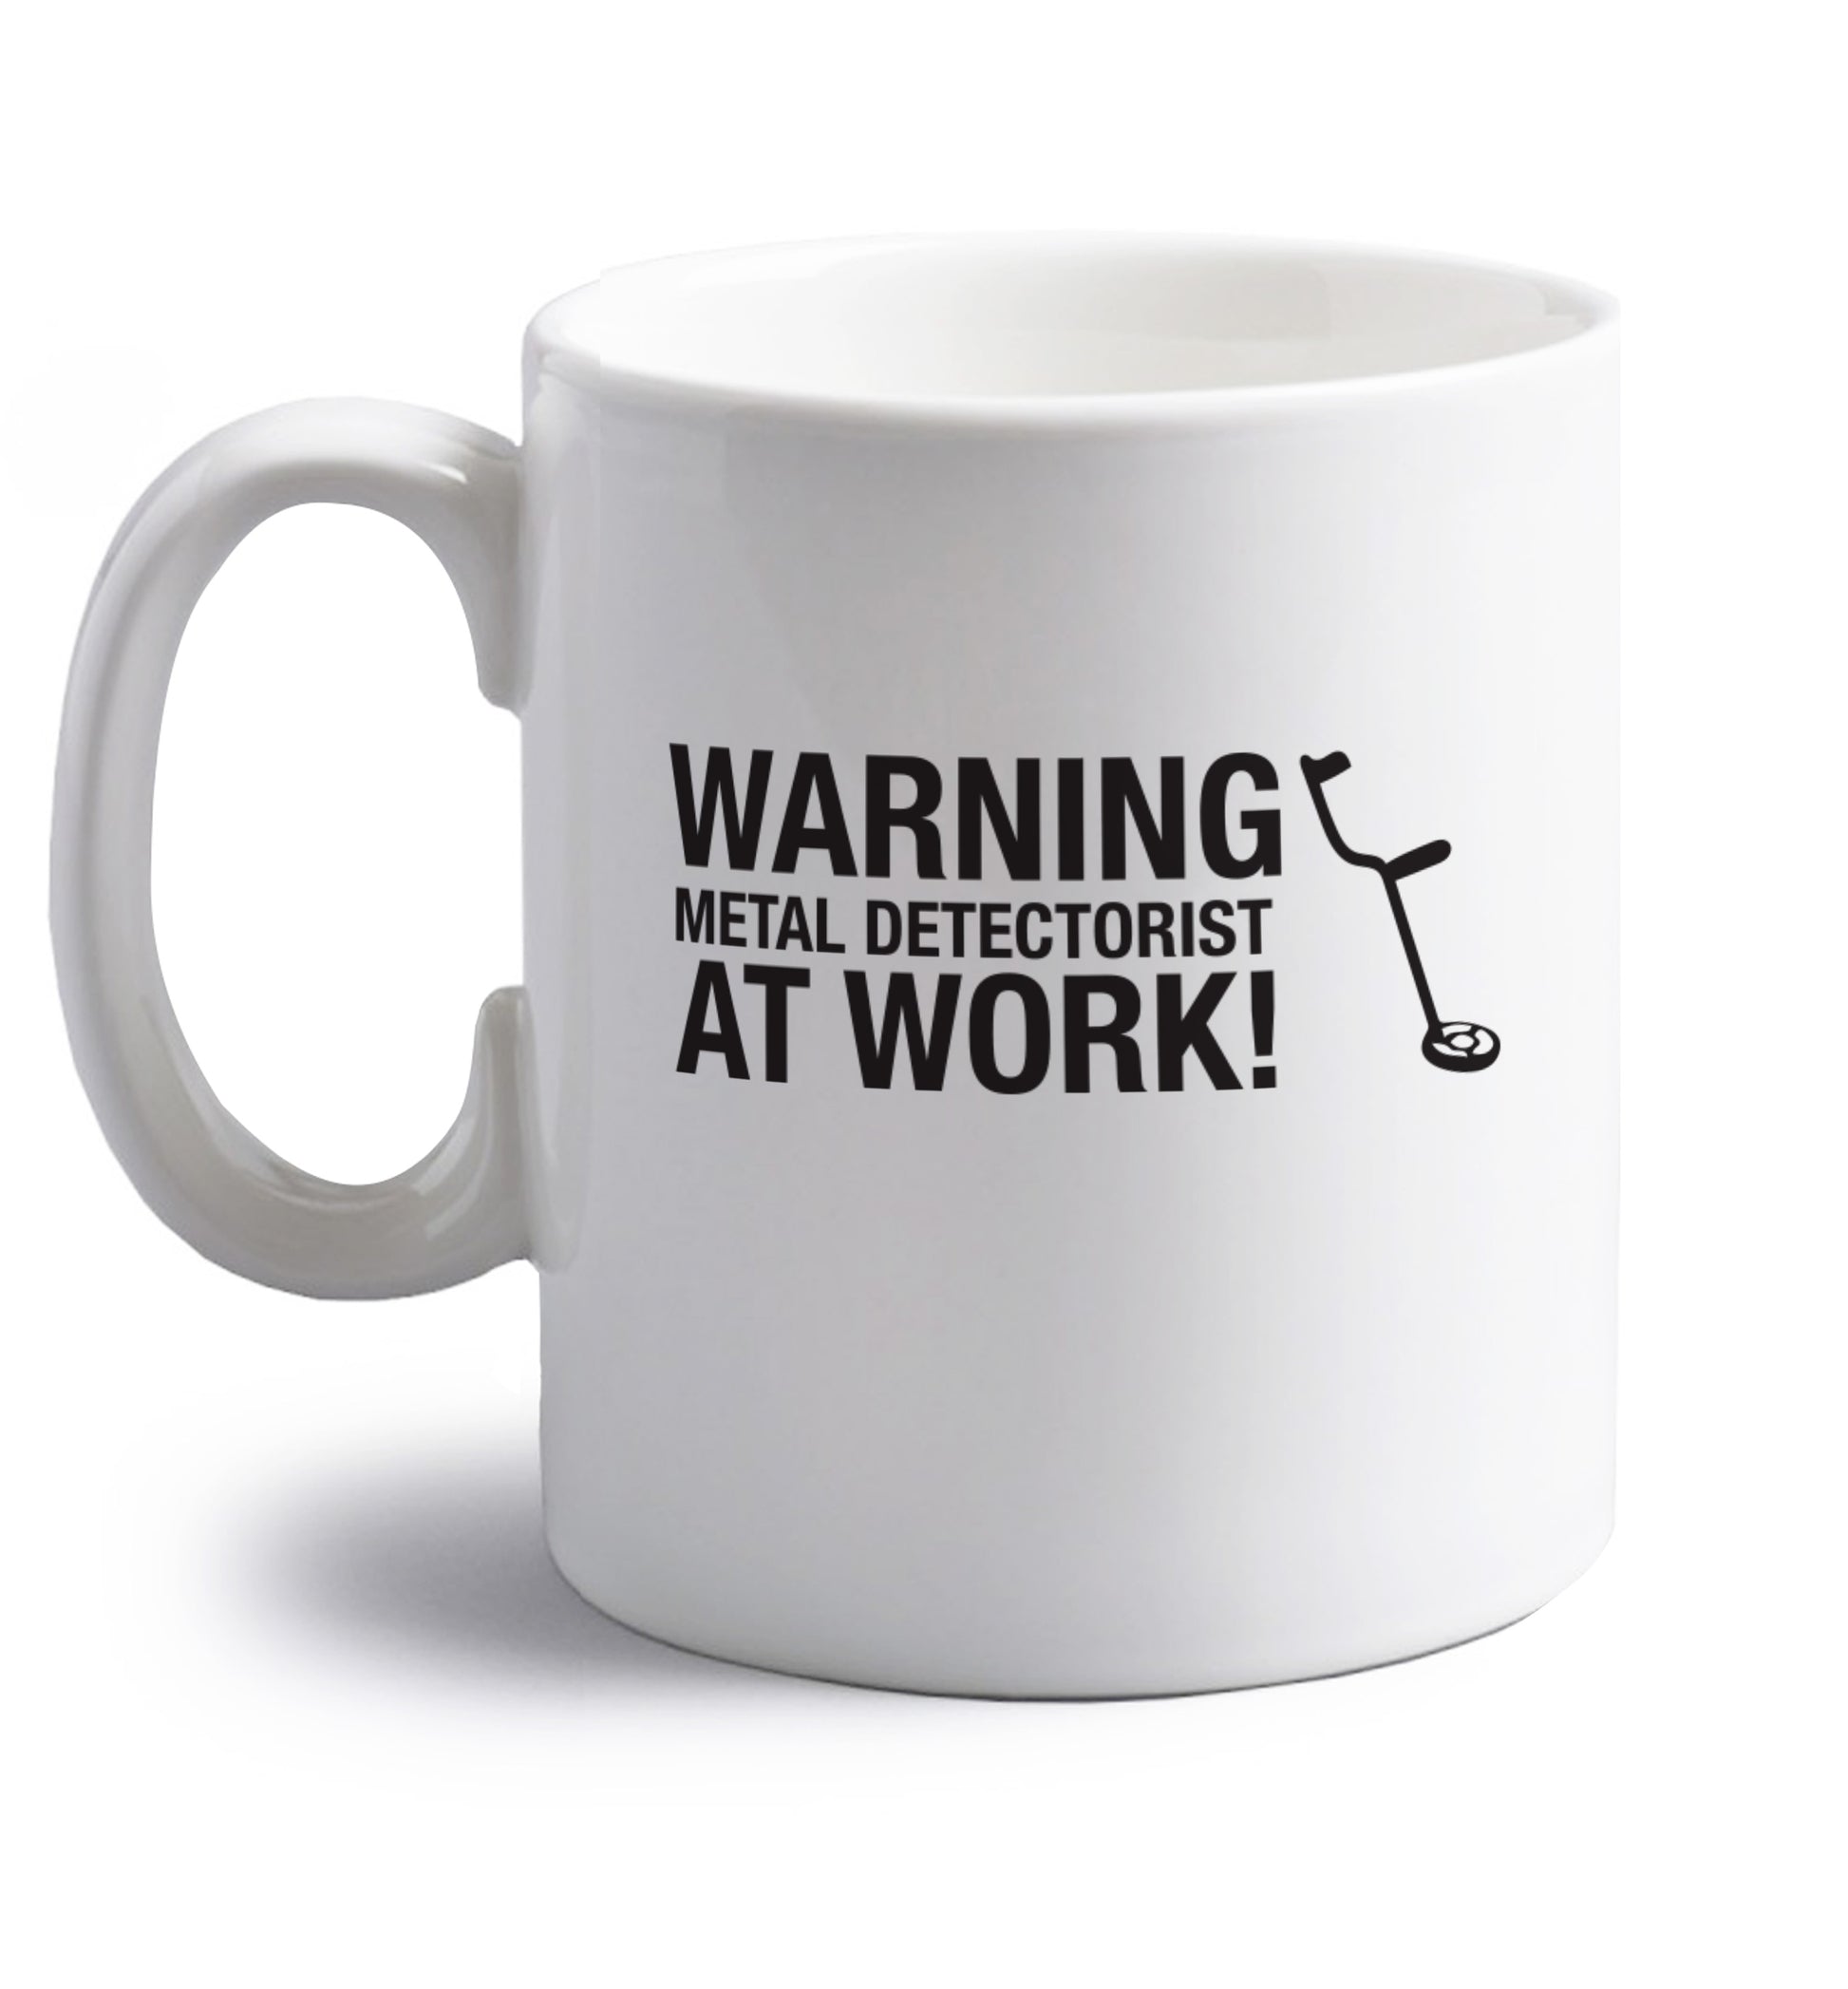 Warning metal detectorist at work! right handed white ceramic mug 